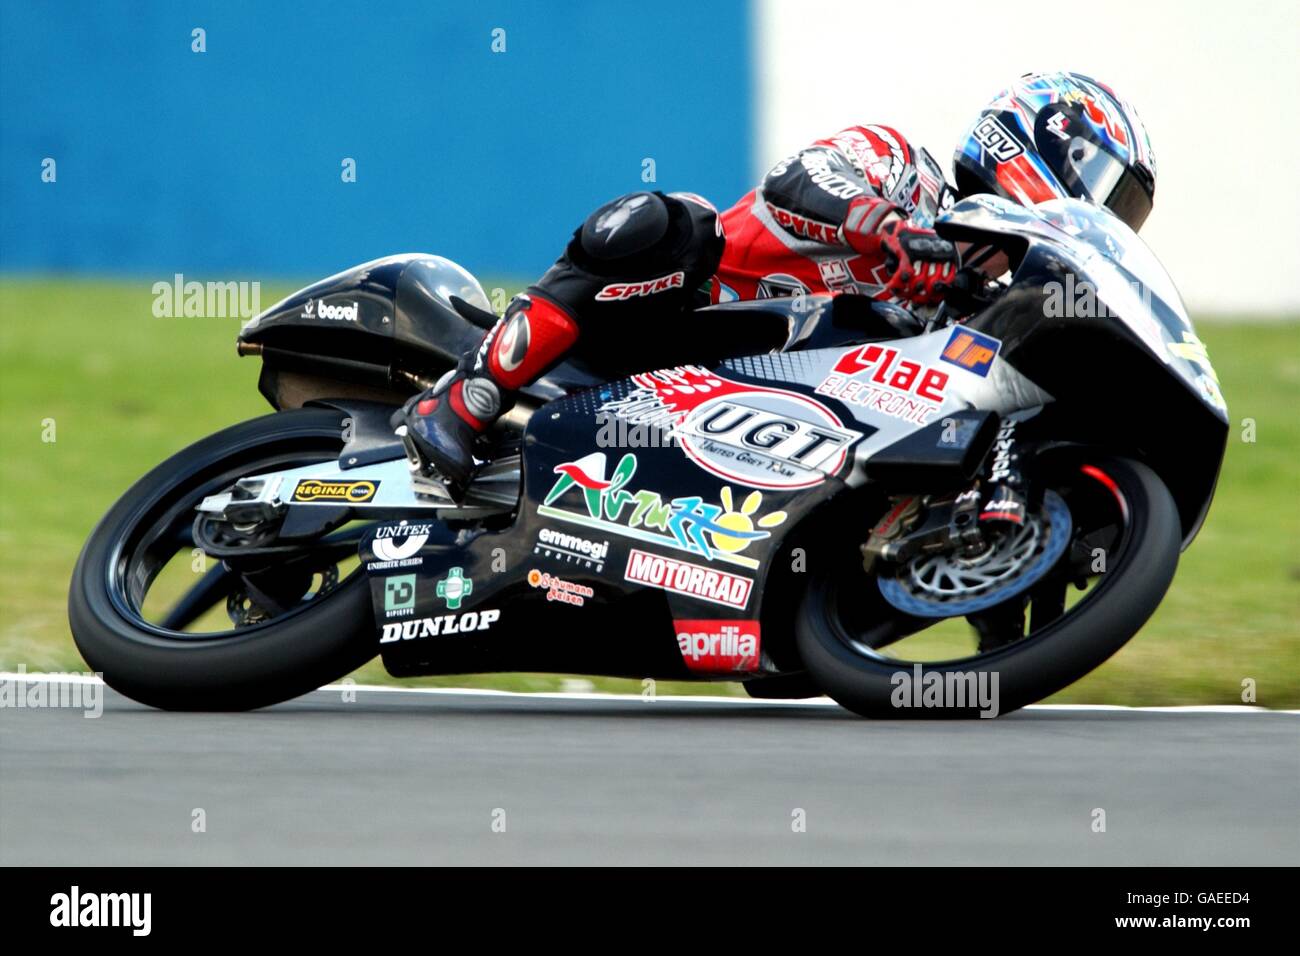 Motorcycling - Cinzano British Grand Prix - Moto GP Stock Photo